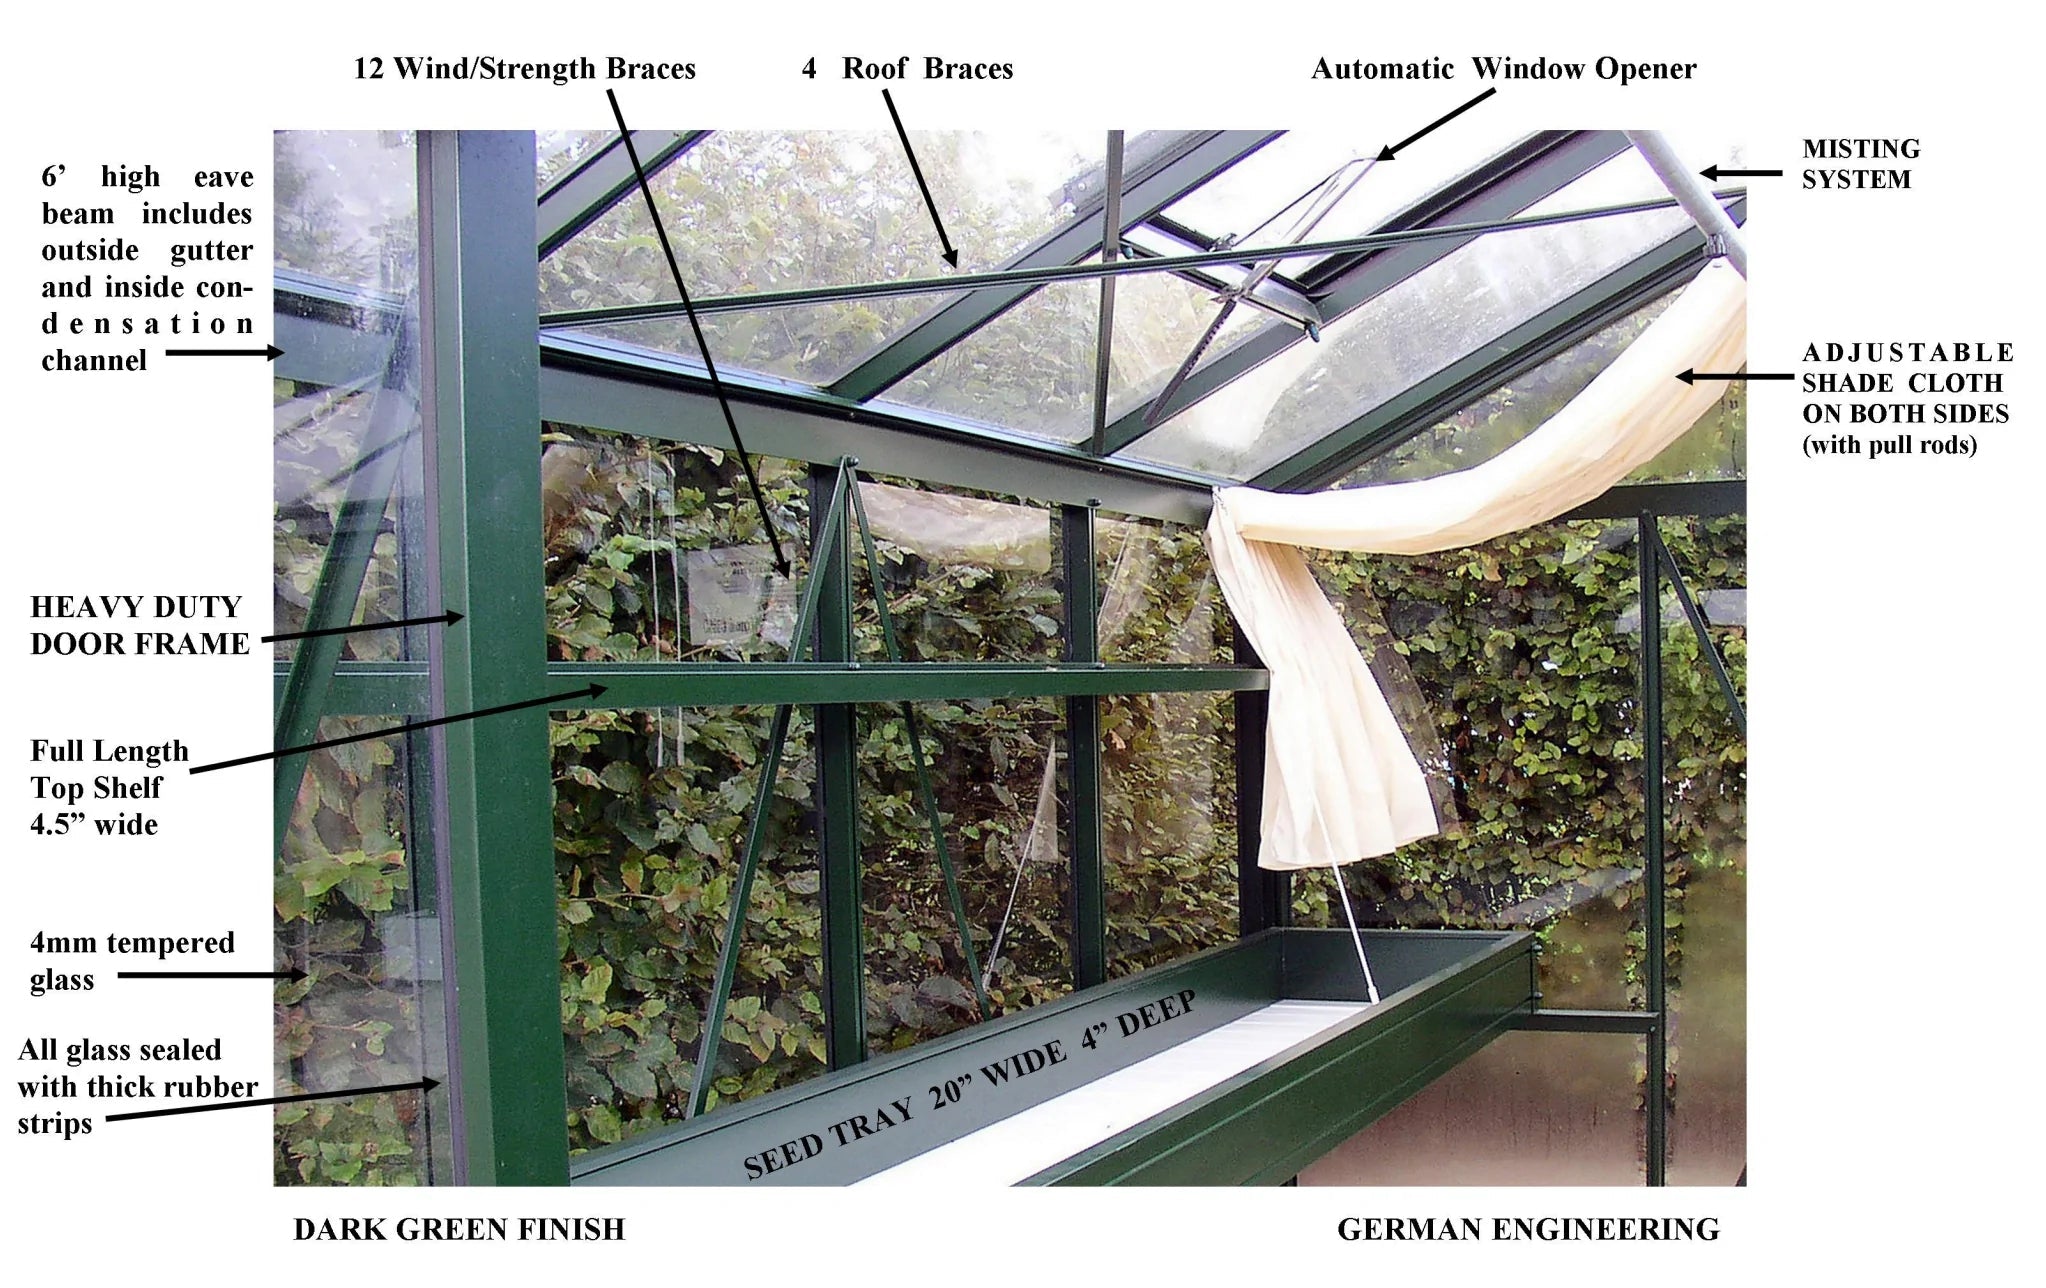 Royal Victorian Greenhouse - Royal Victorian™ 10X9X20.ft VI36 Greenhouse